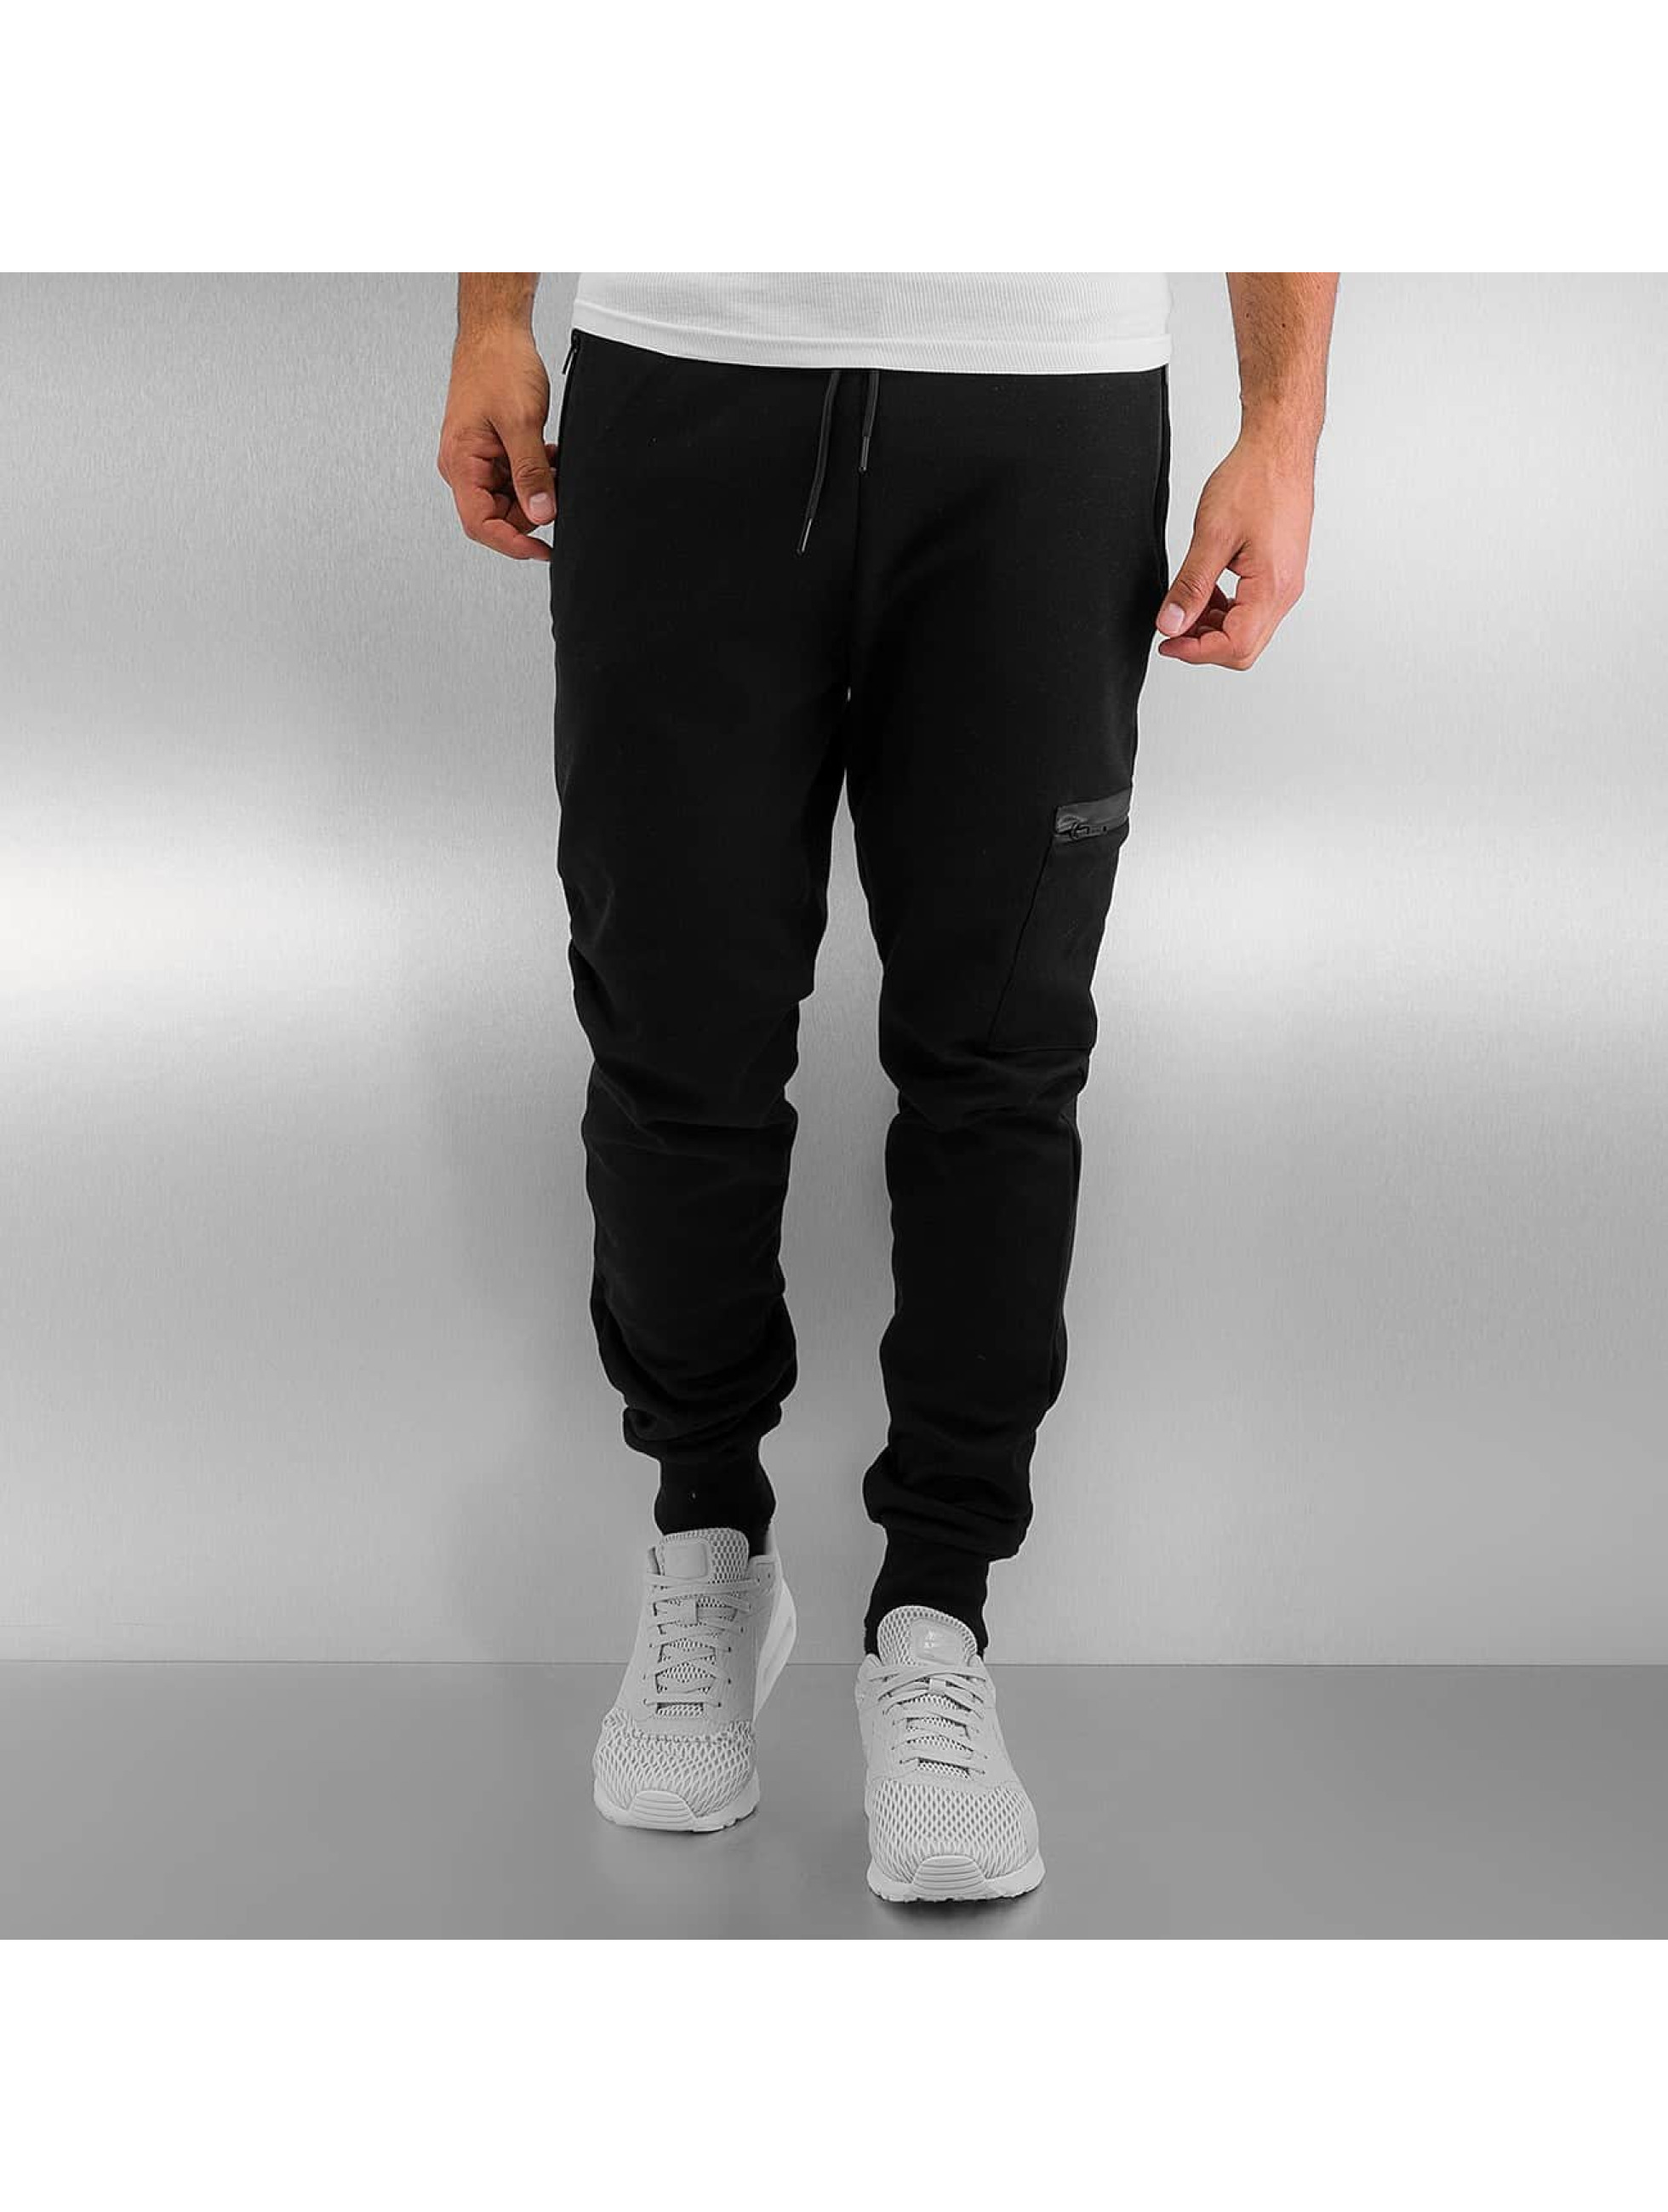 Urban Classics Pantalon / Jogging Athletic Interlock en noir